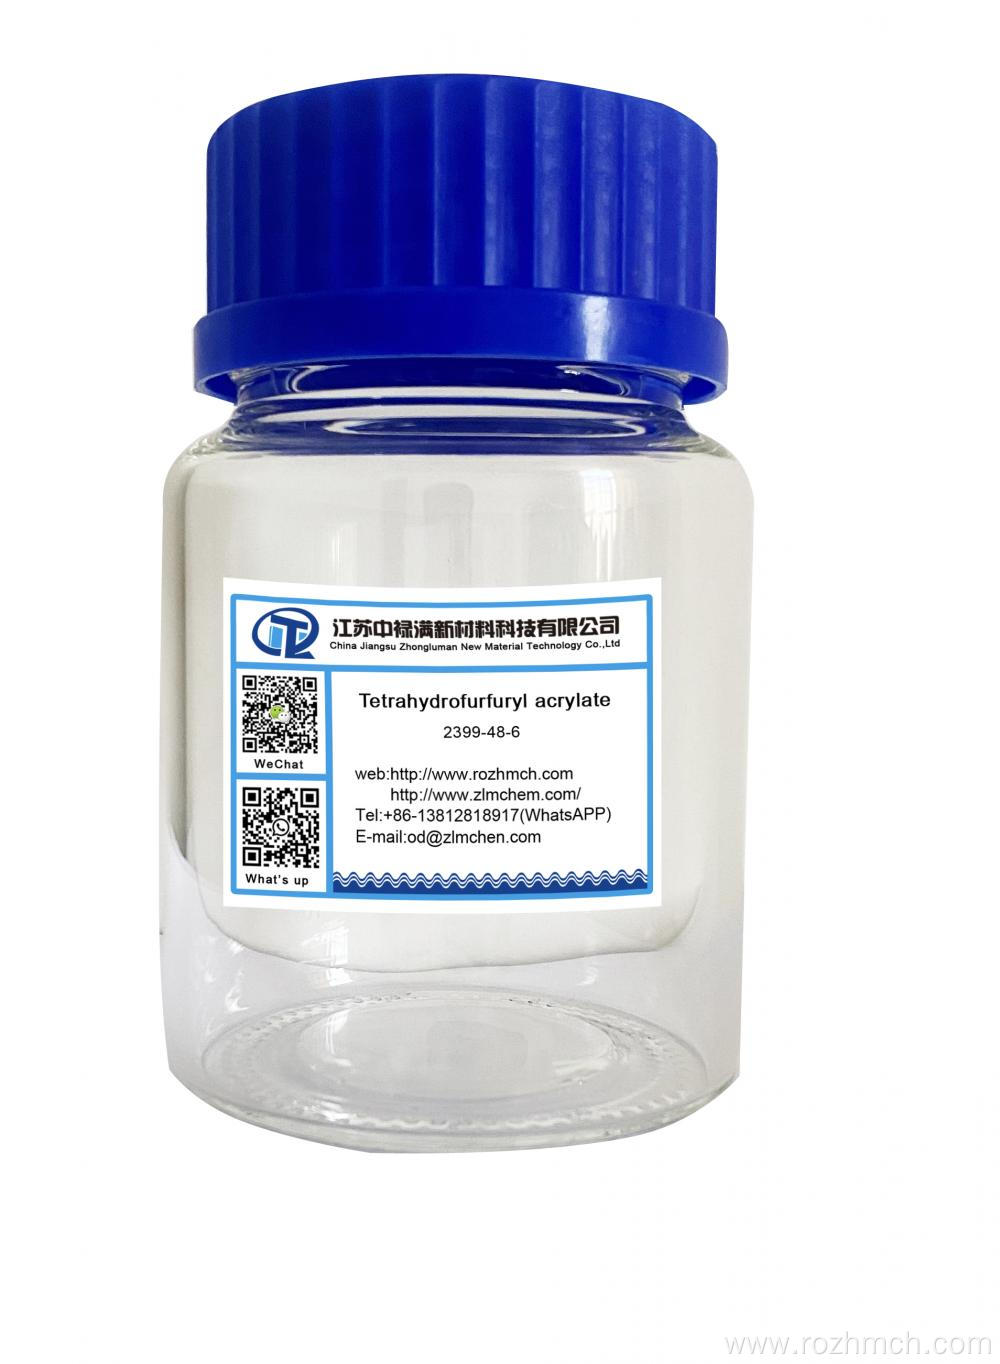 Tetrahydrofurfuryl Acrylate CAS 2399-48-6